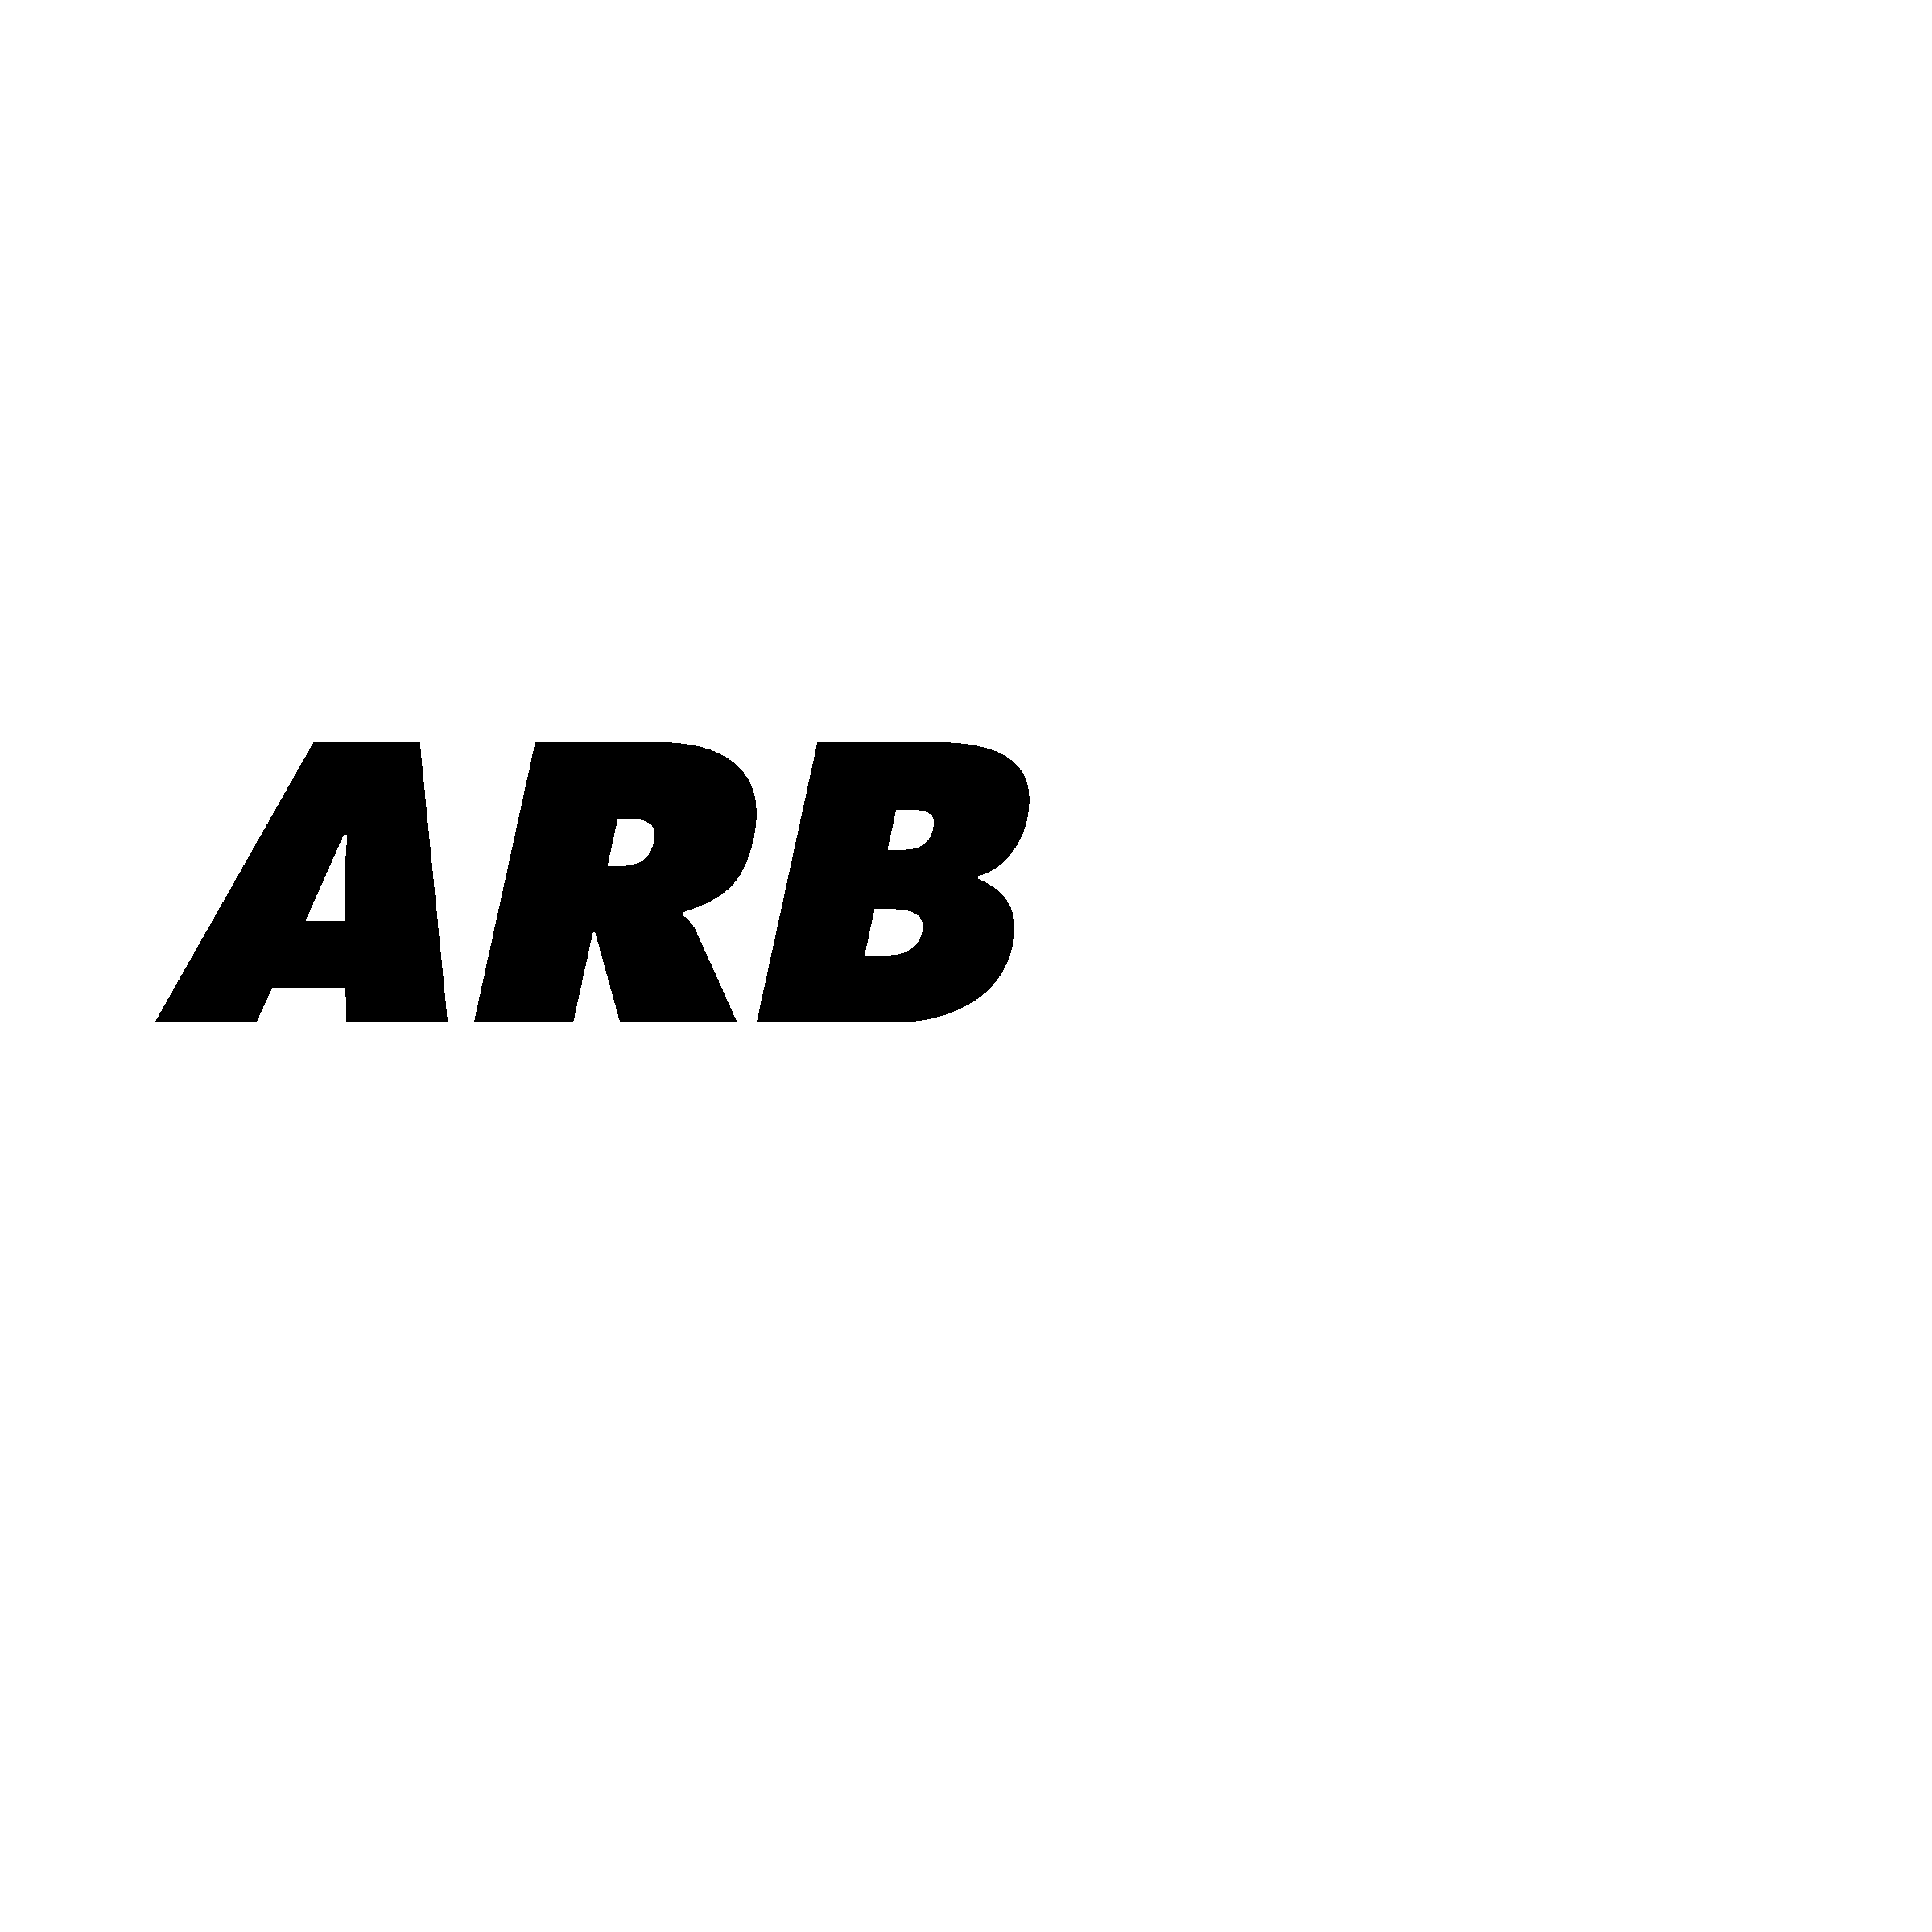 ARB Logo PNG Transparent & SVG Vector.